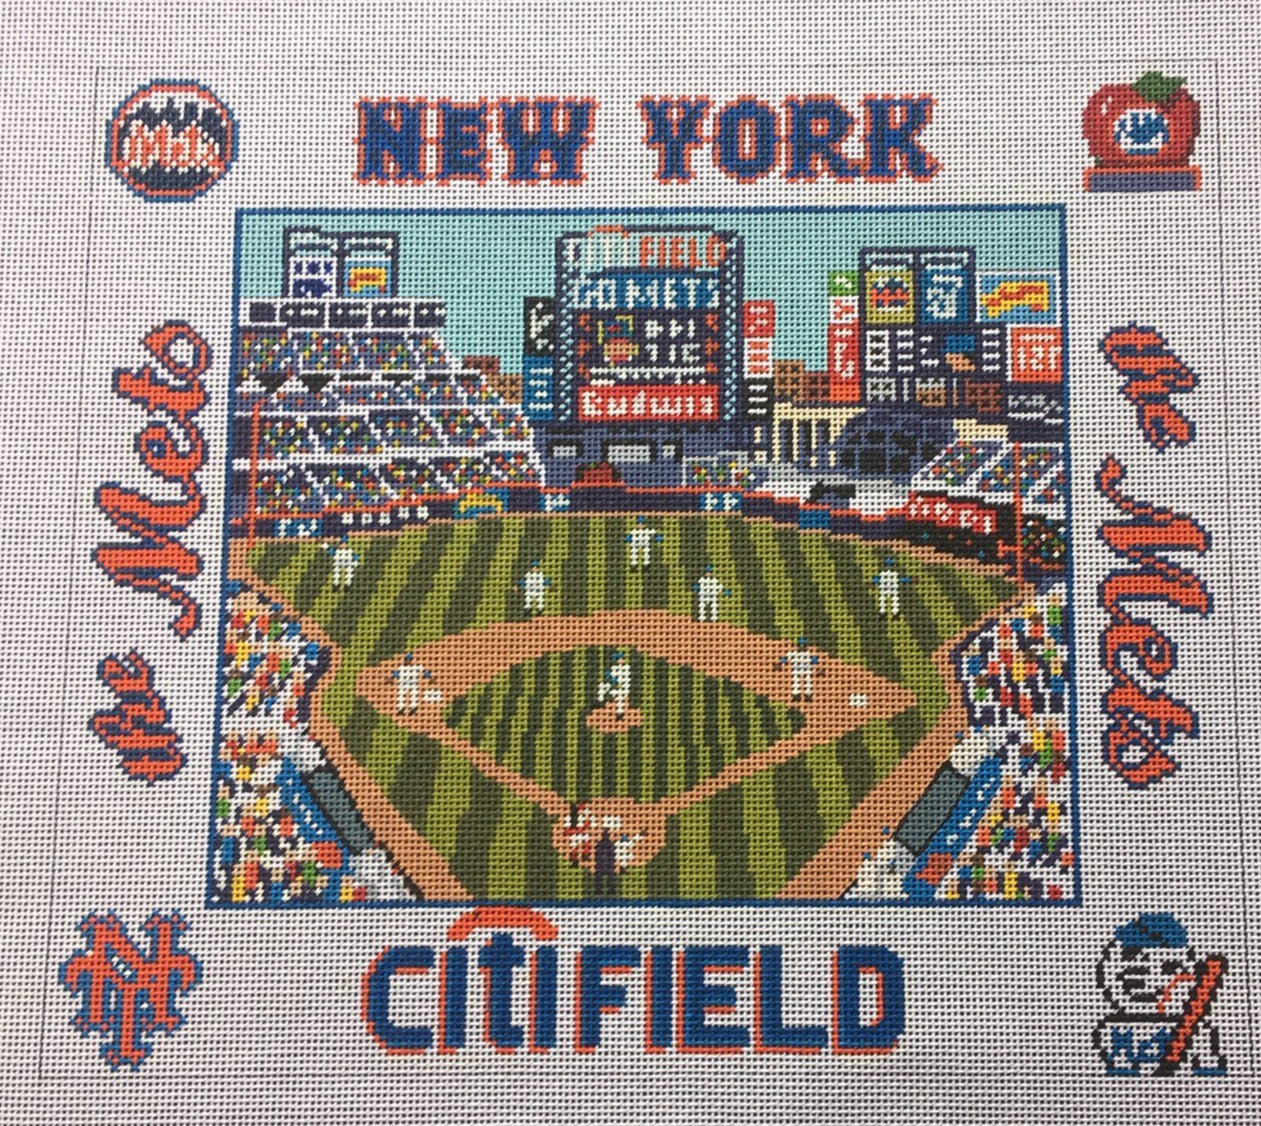 MBM-PL71 New York Mets at Citi Field